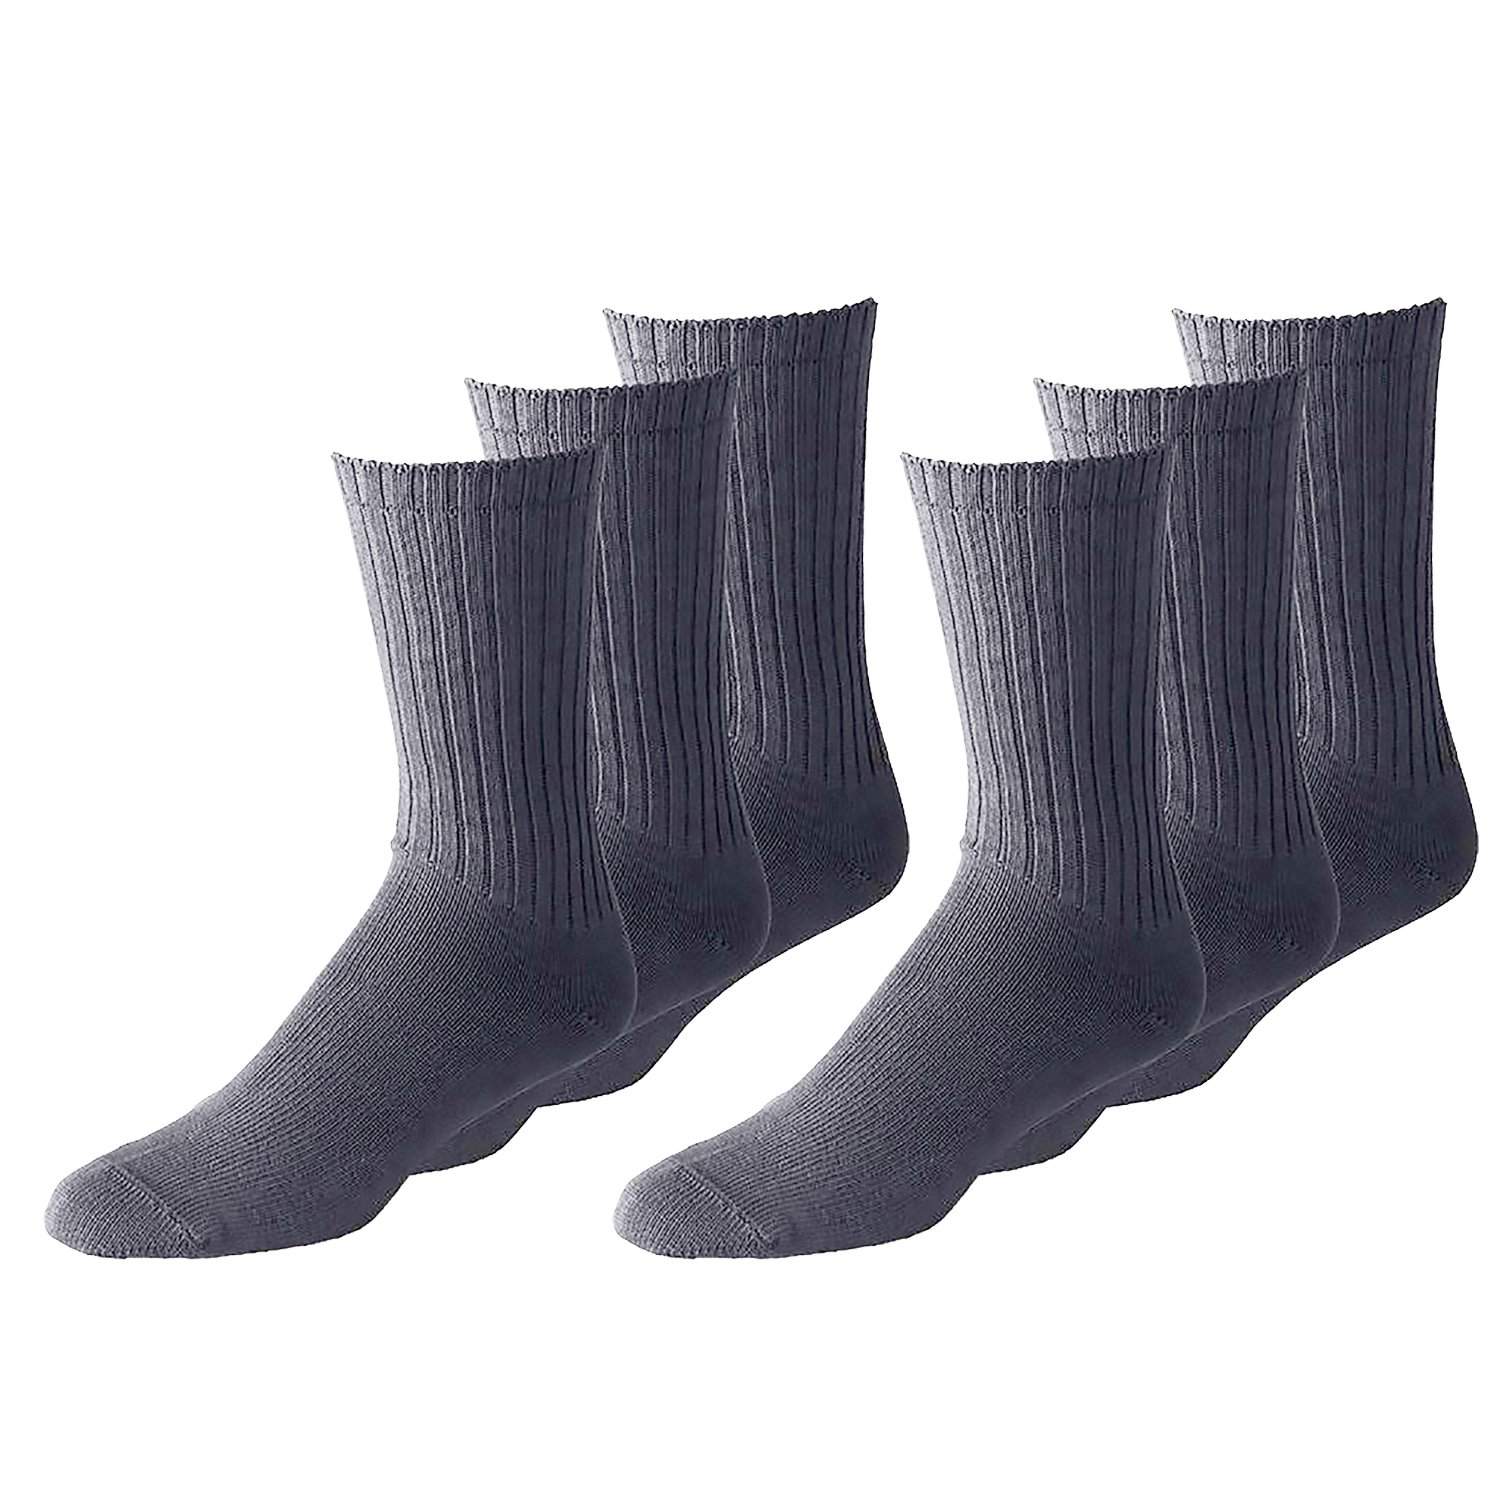 108 Pairs Men's Athletic Crew Socks - Wholesale Lot Packs - Any Shoe Size